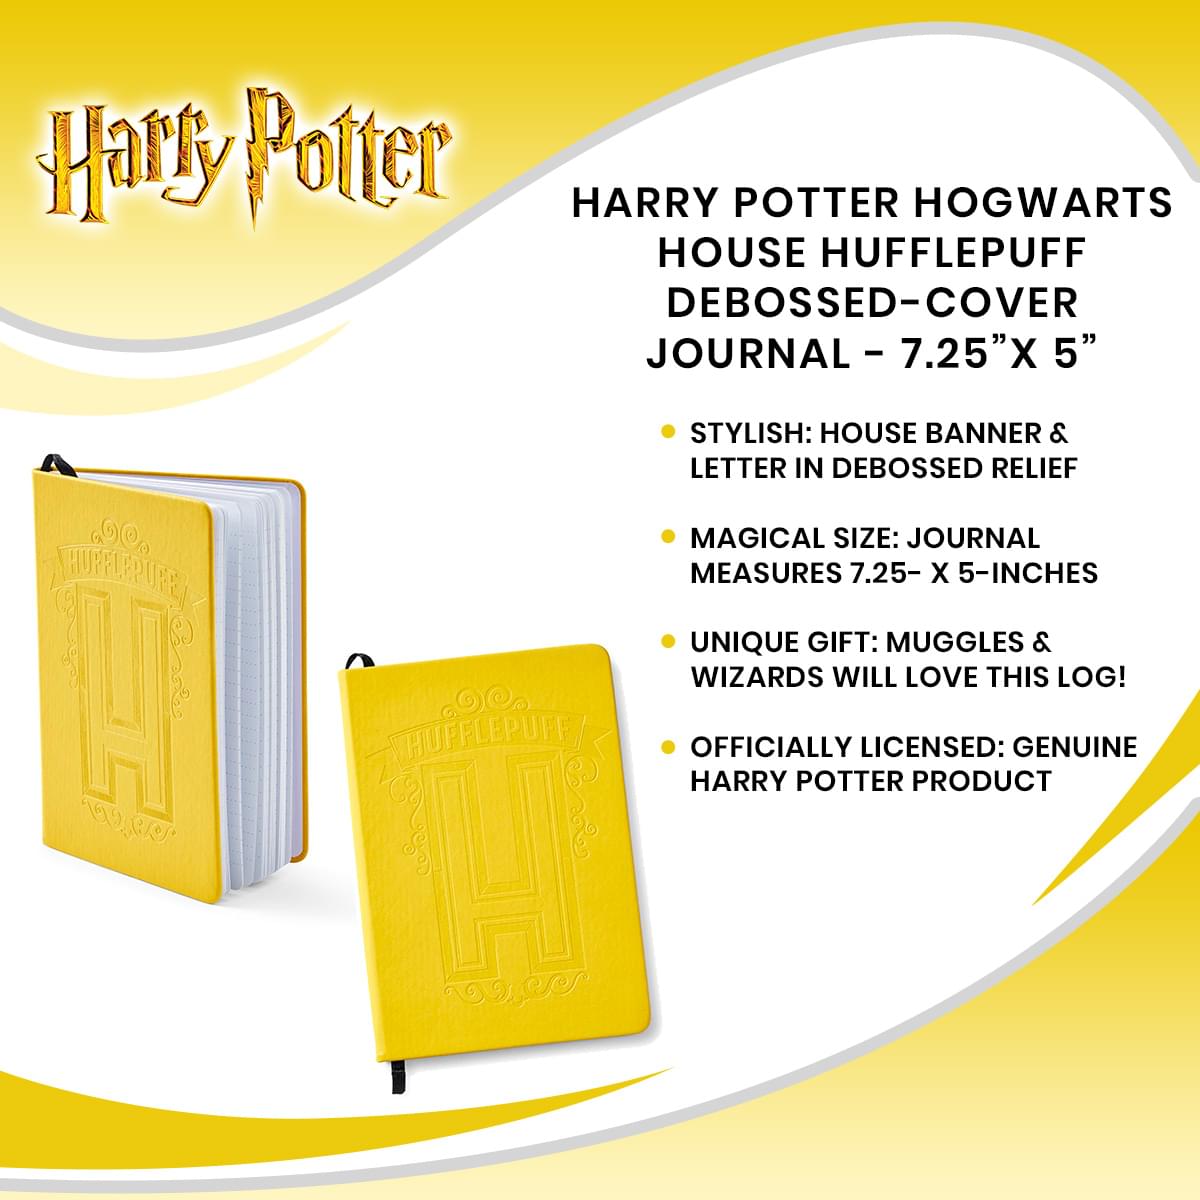 Harry Potter Hogwarts House Hufflepuff Debossed-Cover Journal - 7.25”x 5”